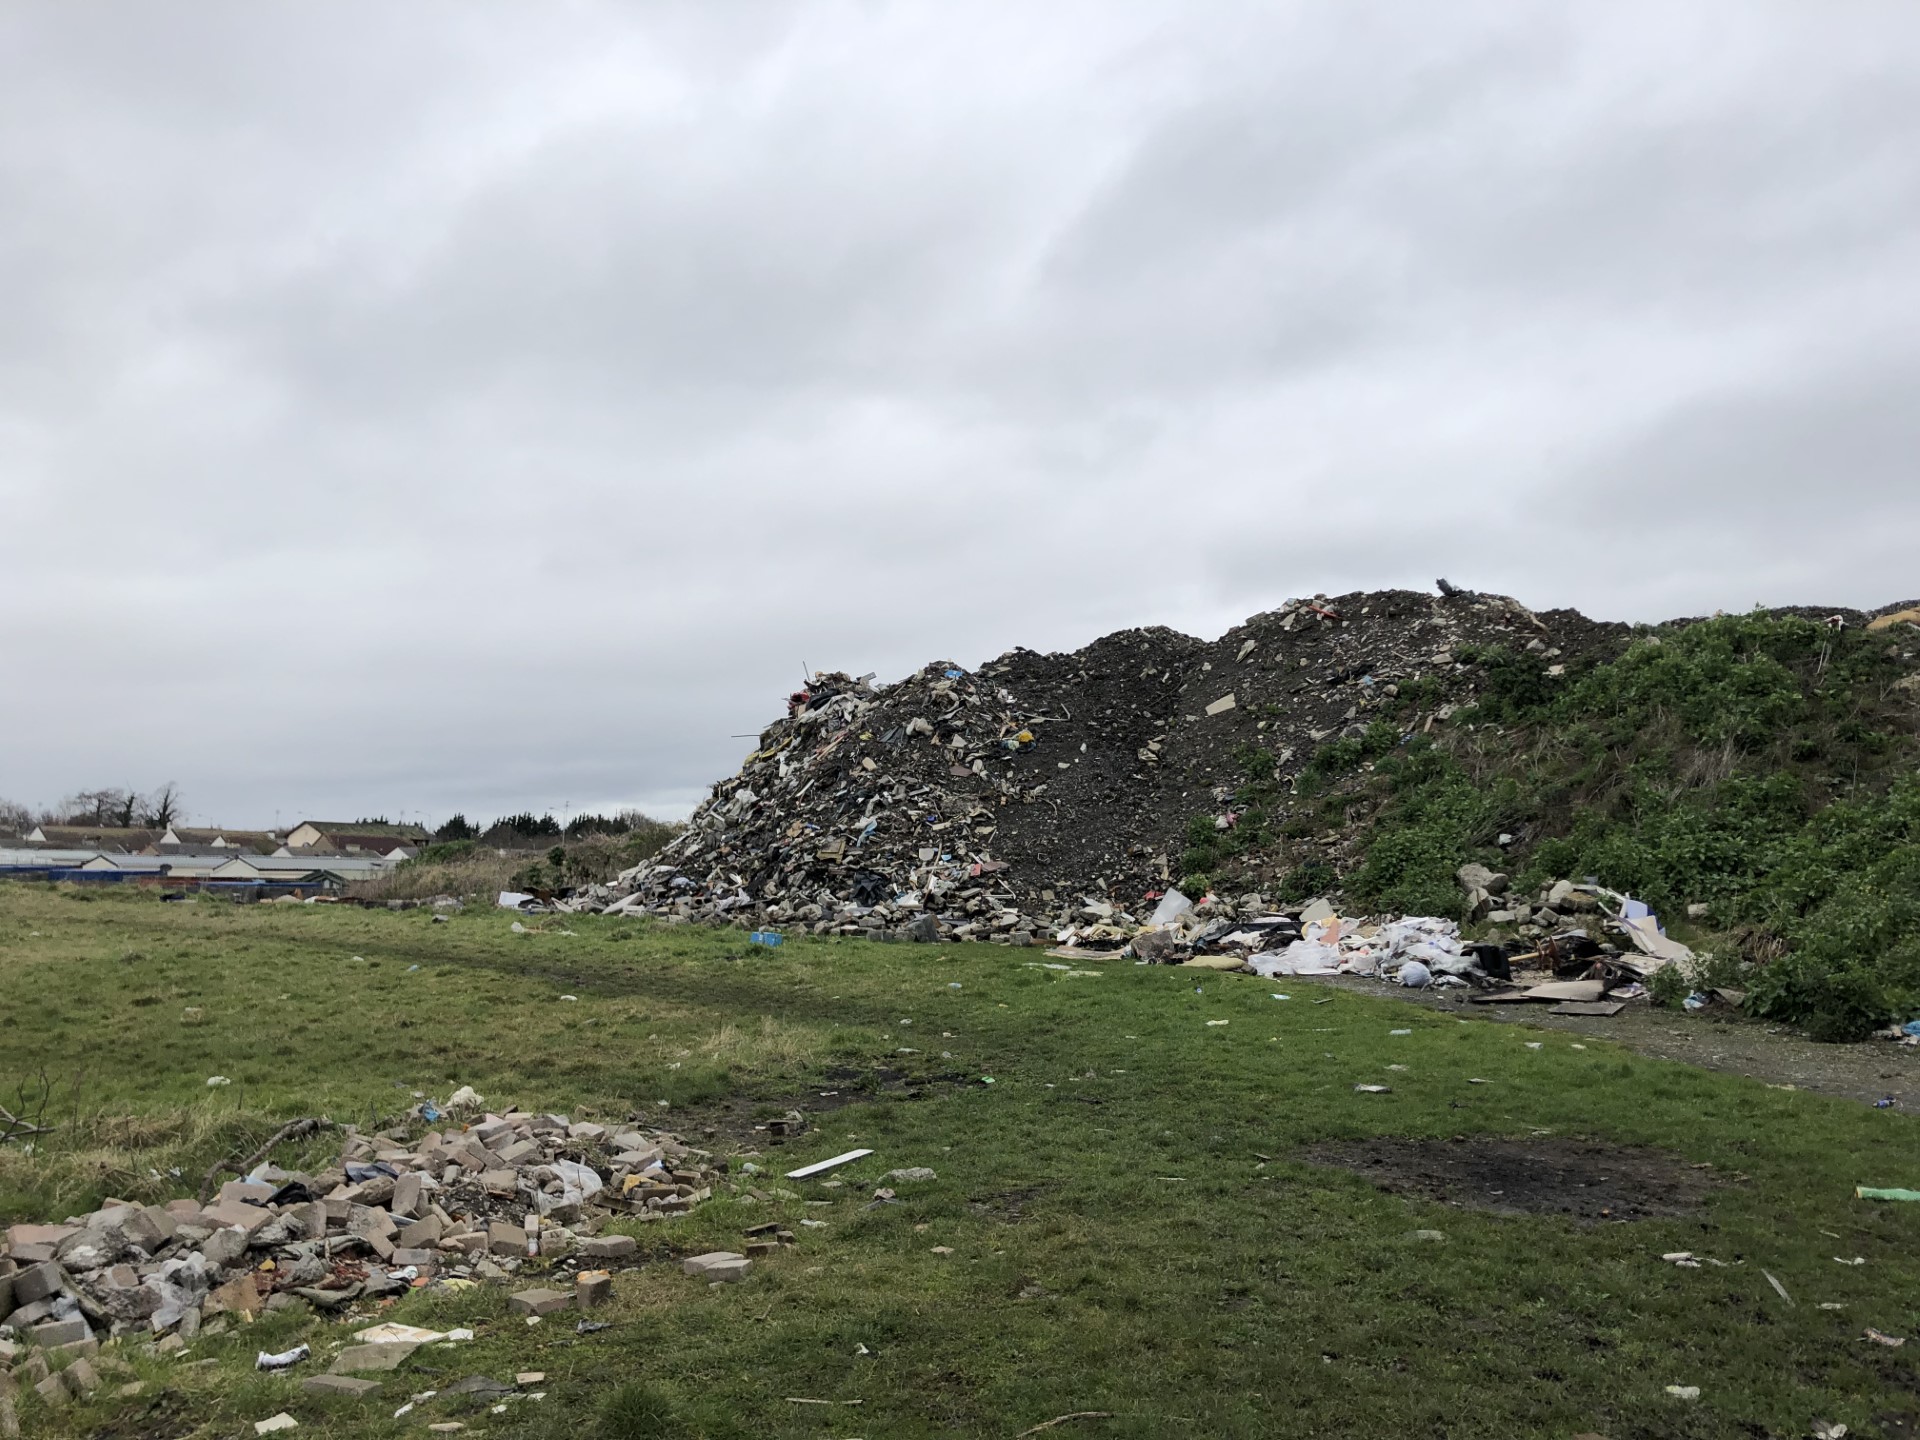 Illegal dump near Darndale Dublin 1